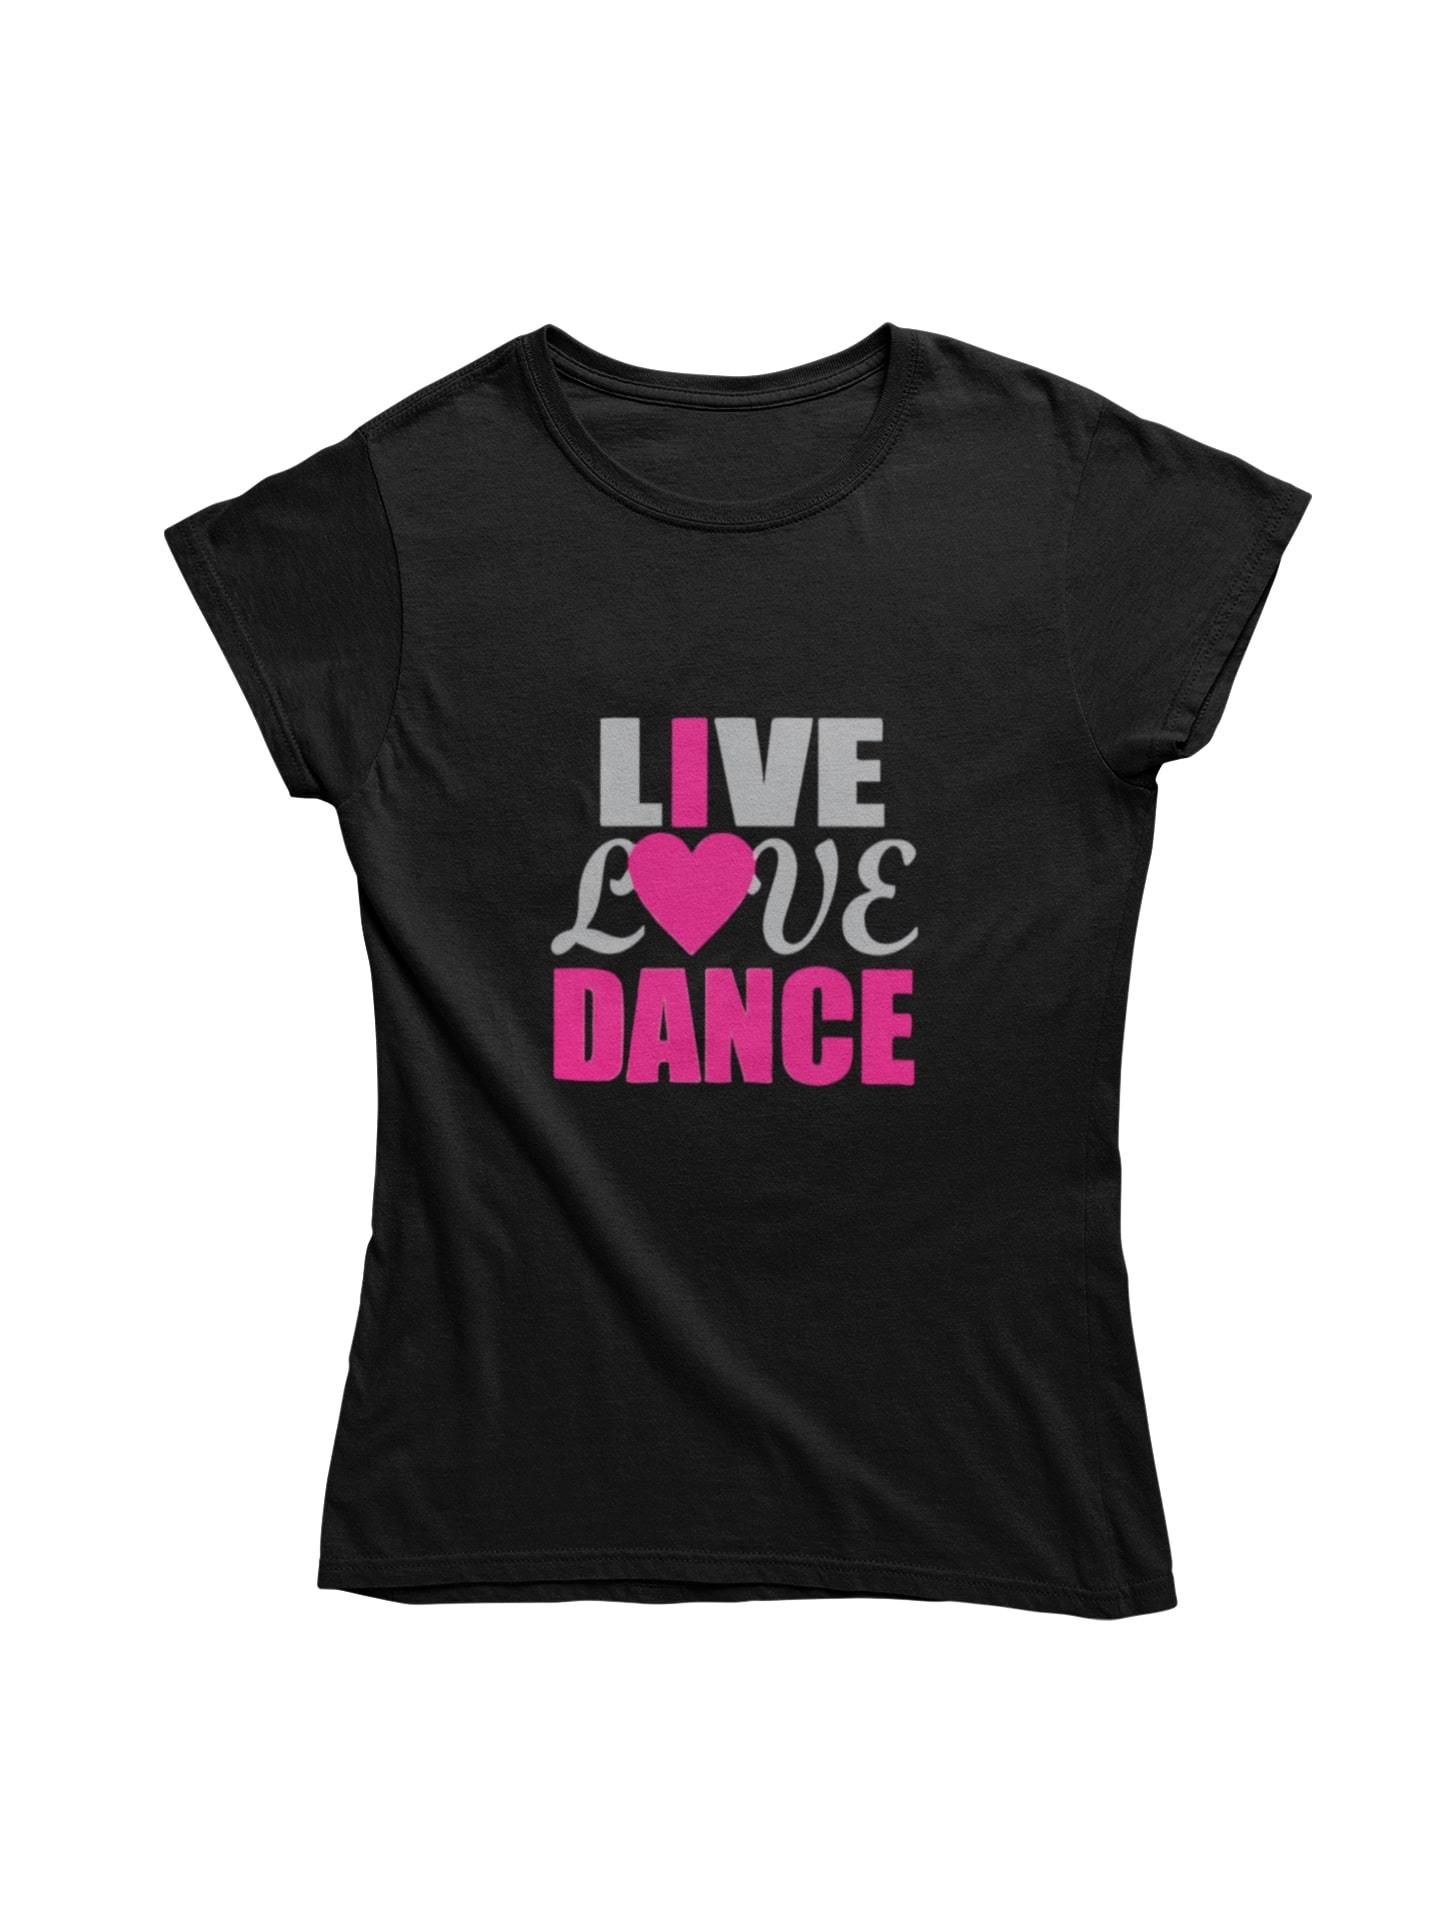 thelegalgang,Live Love Dance Graphic T shirt for Women,WOMEN.